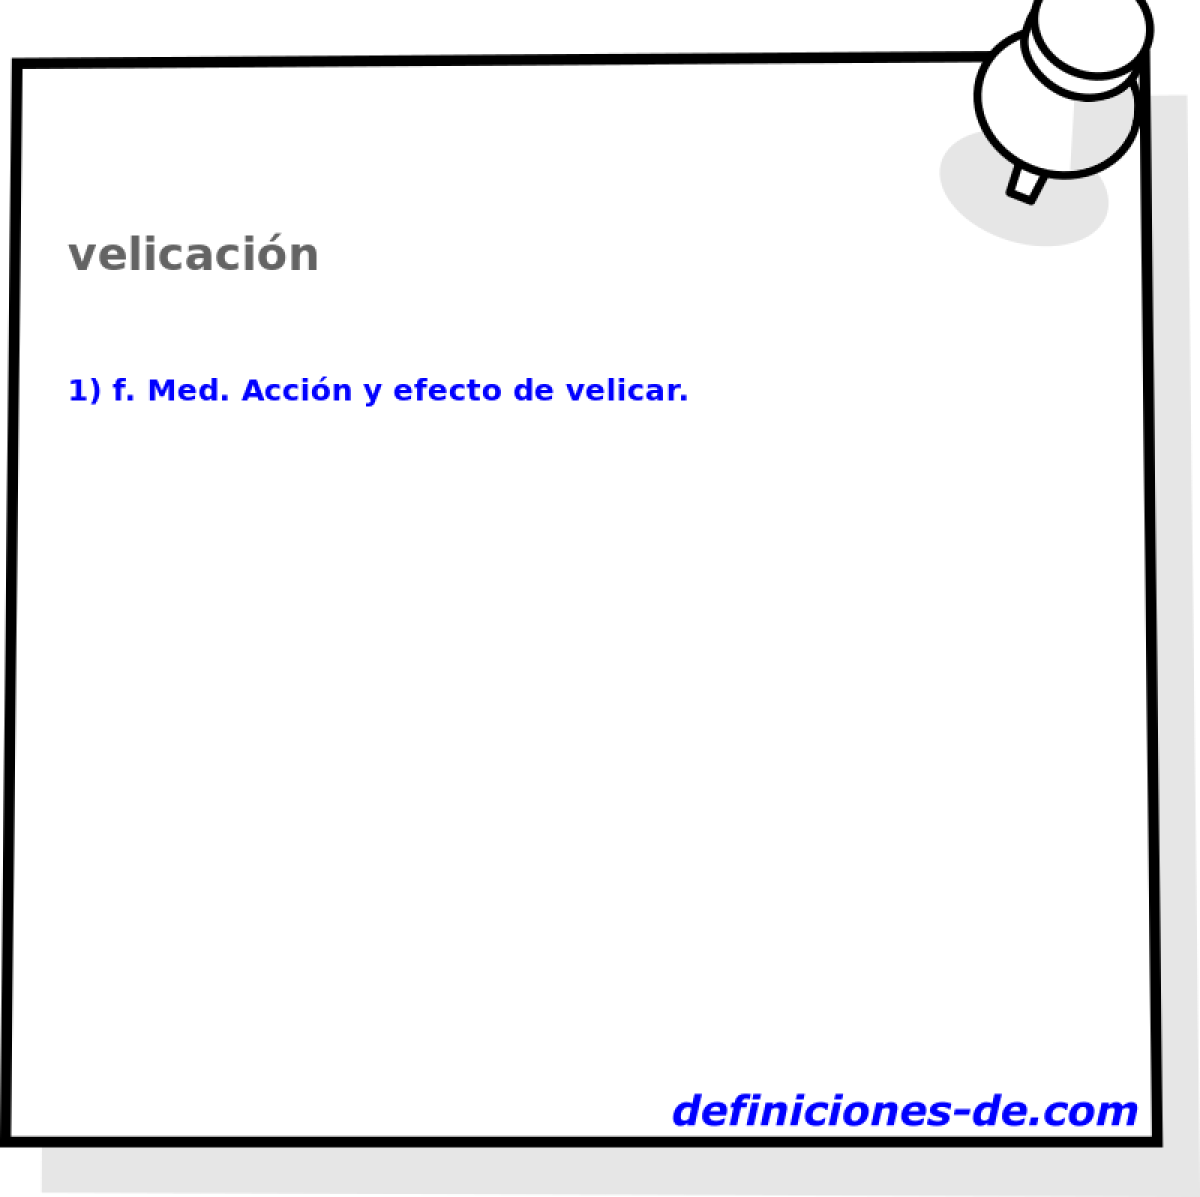 velicacin 